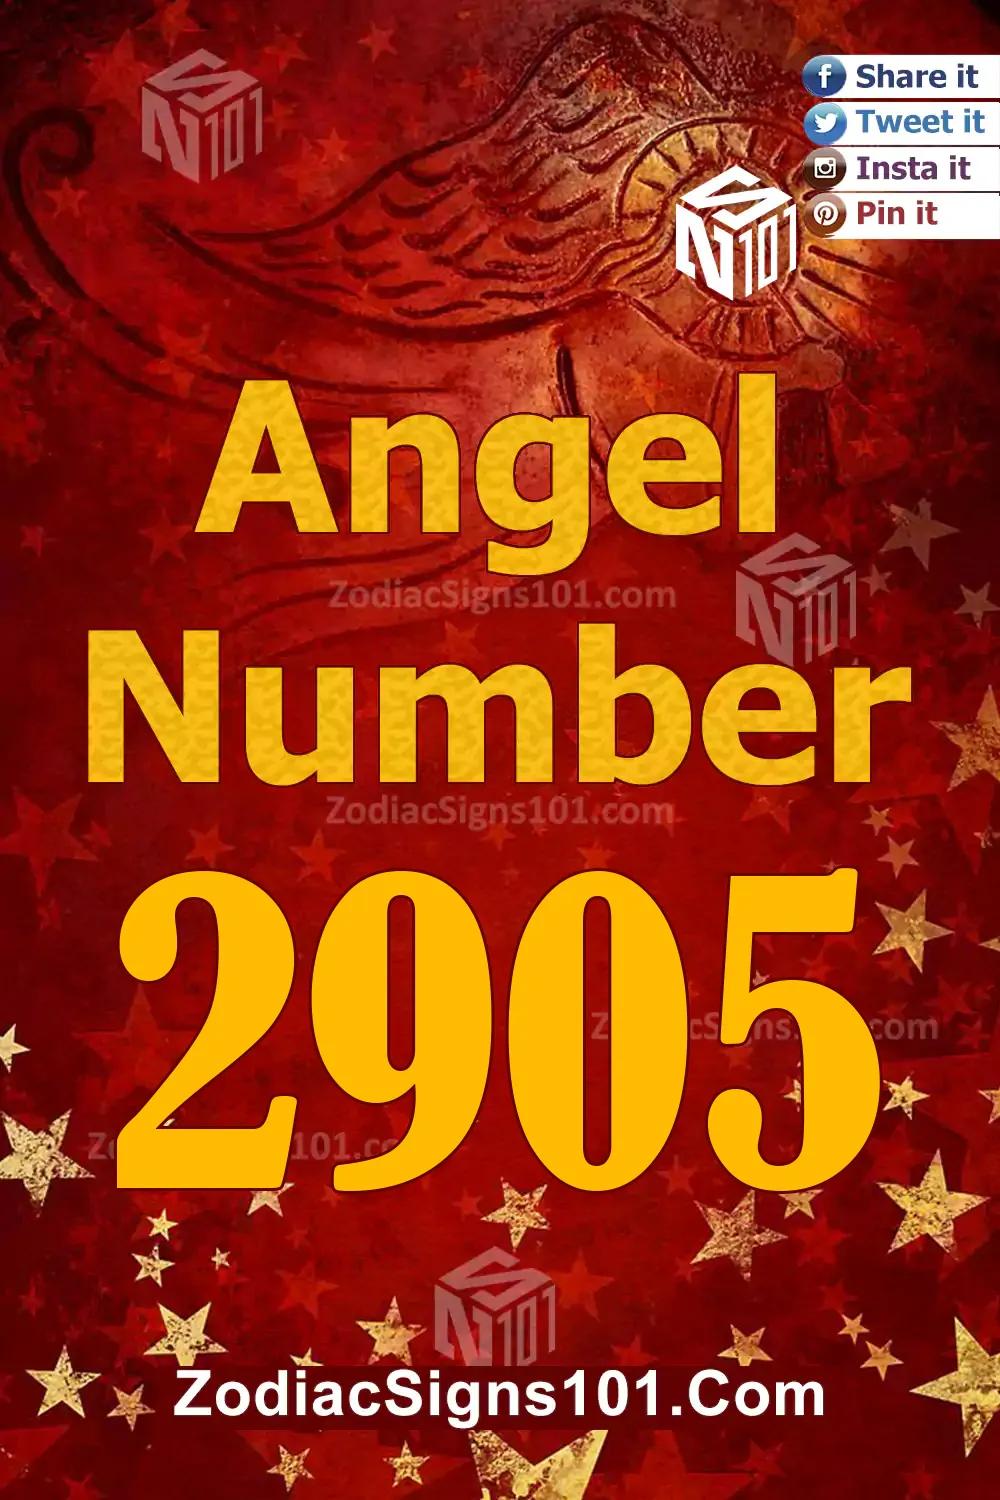 2905-Angel-Number-Meaning.jpg